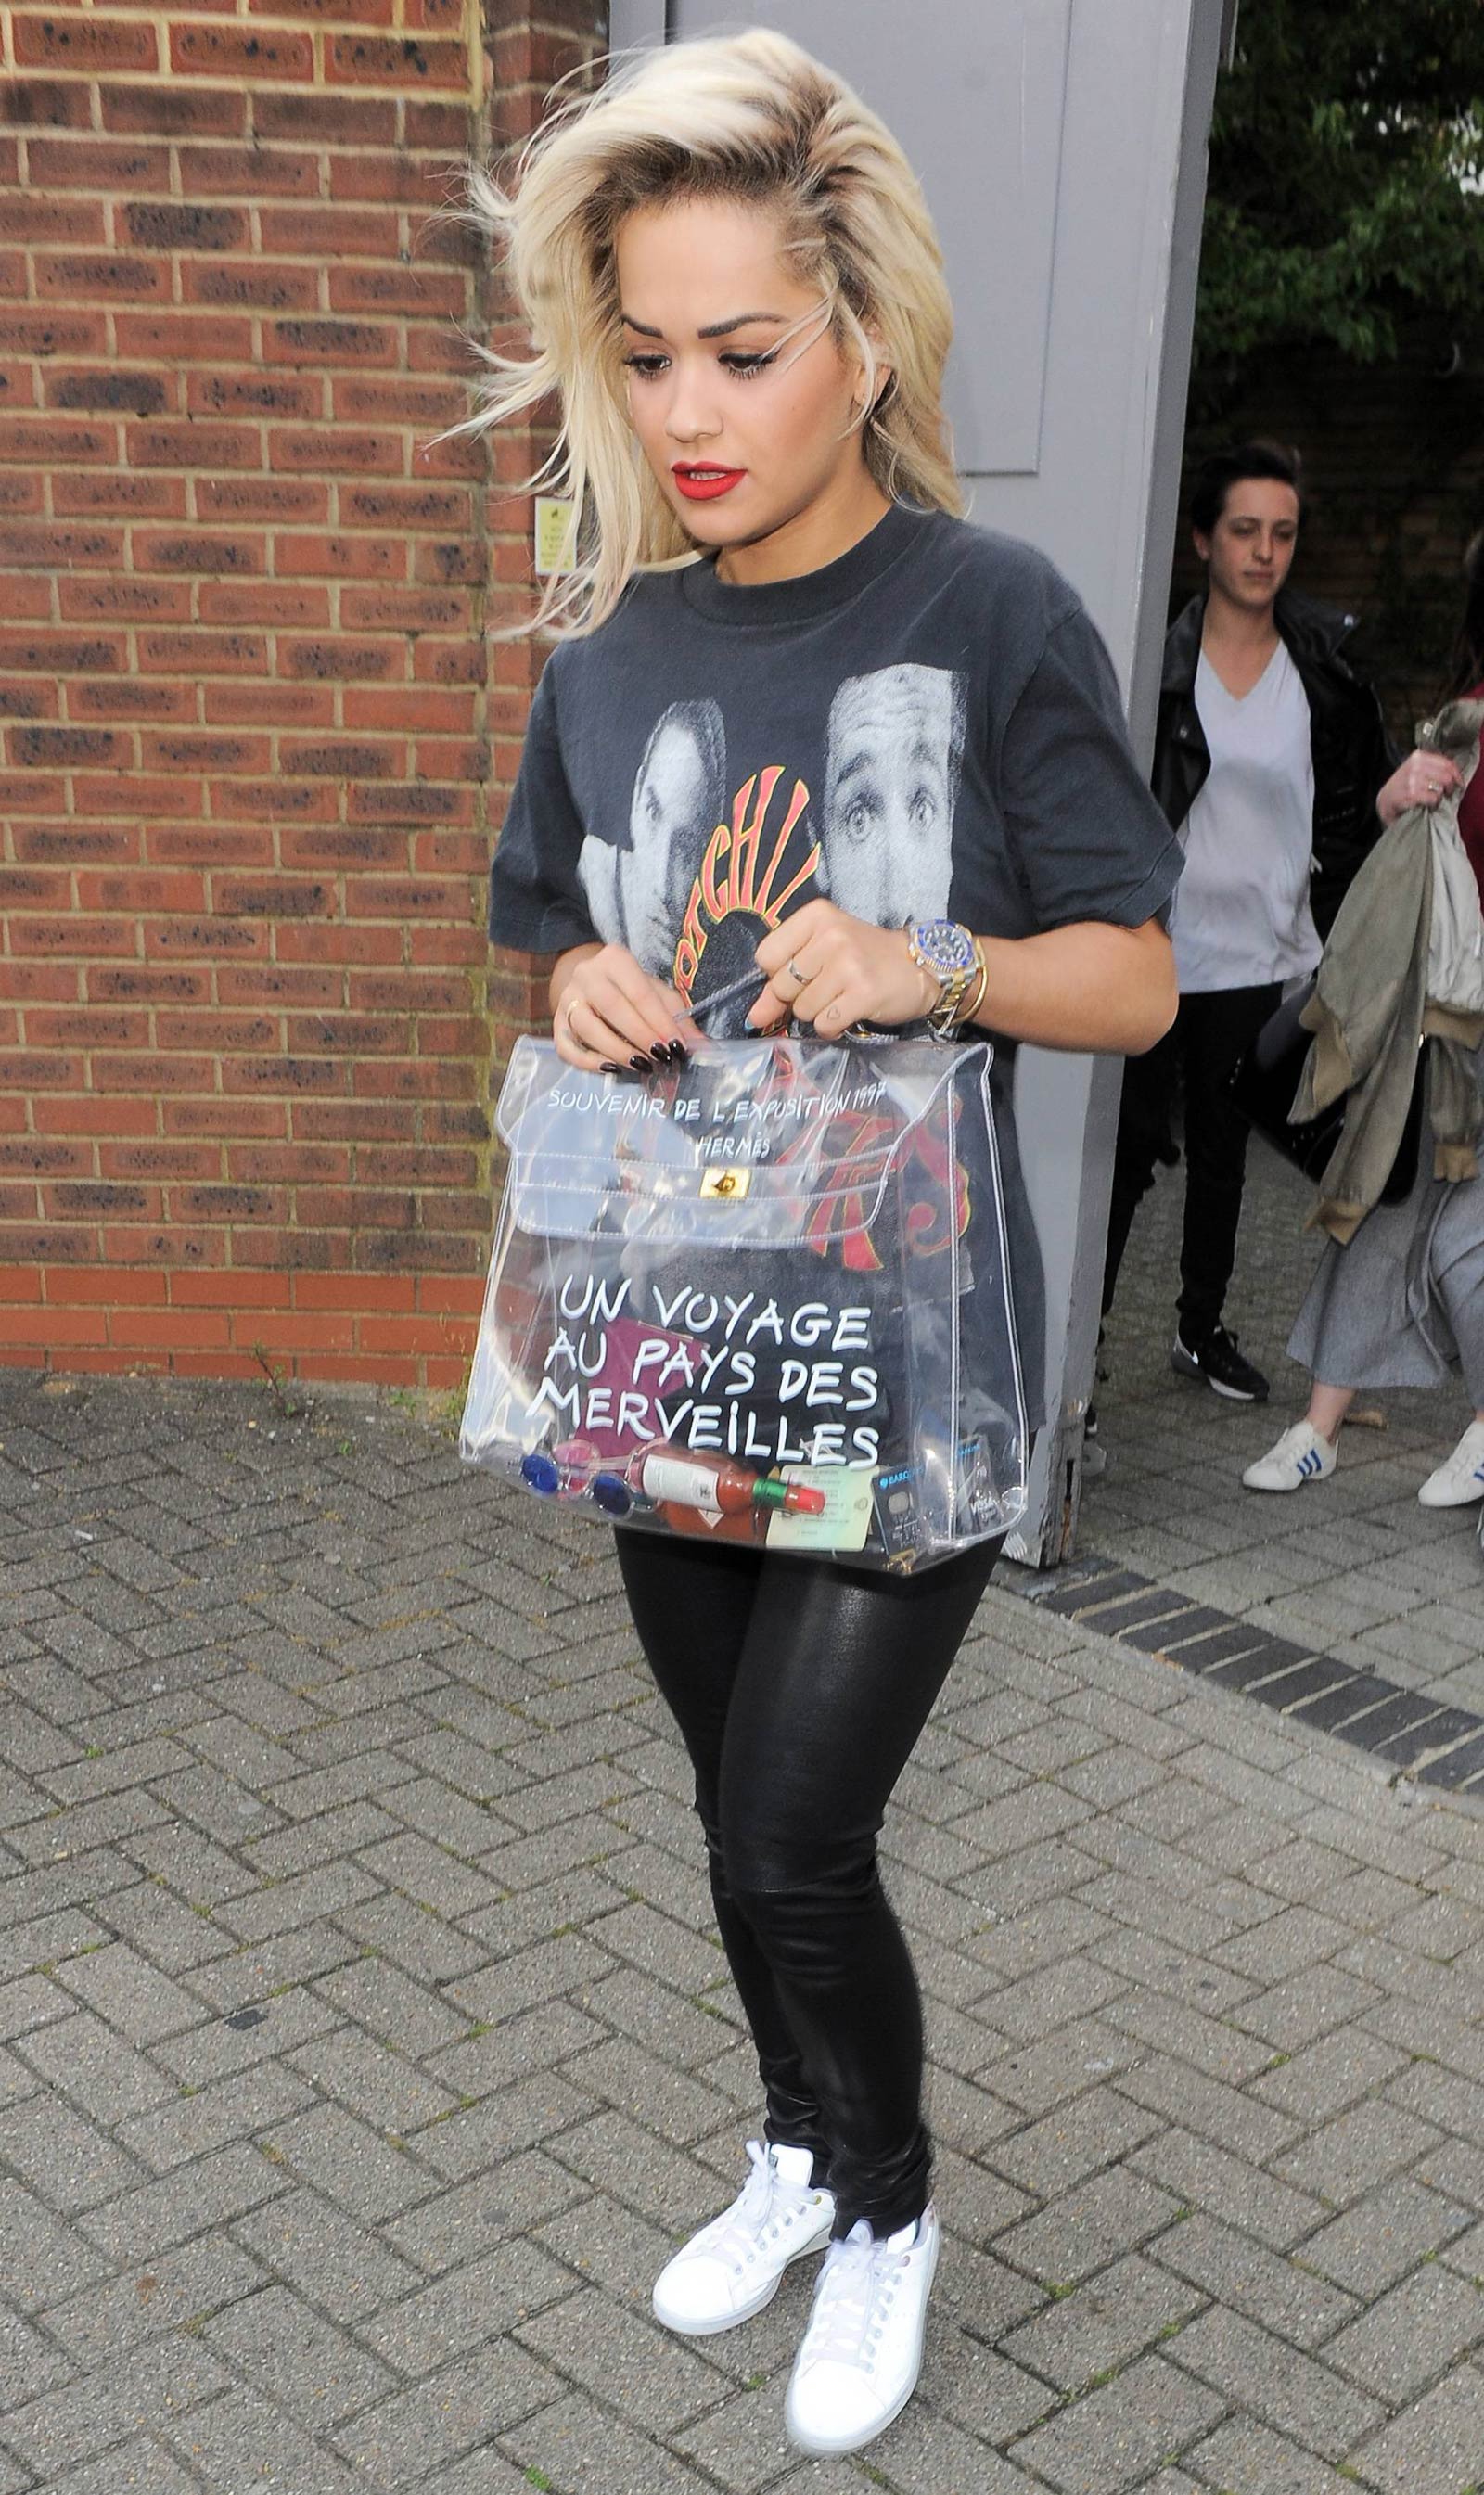 Rita Ora leaving a photo studio in London